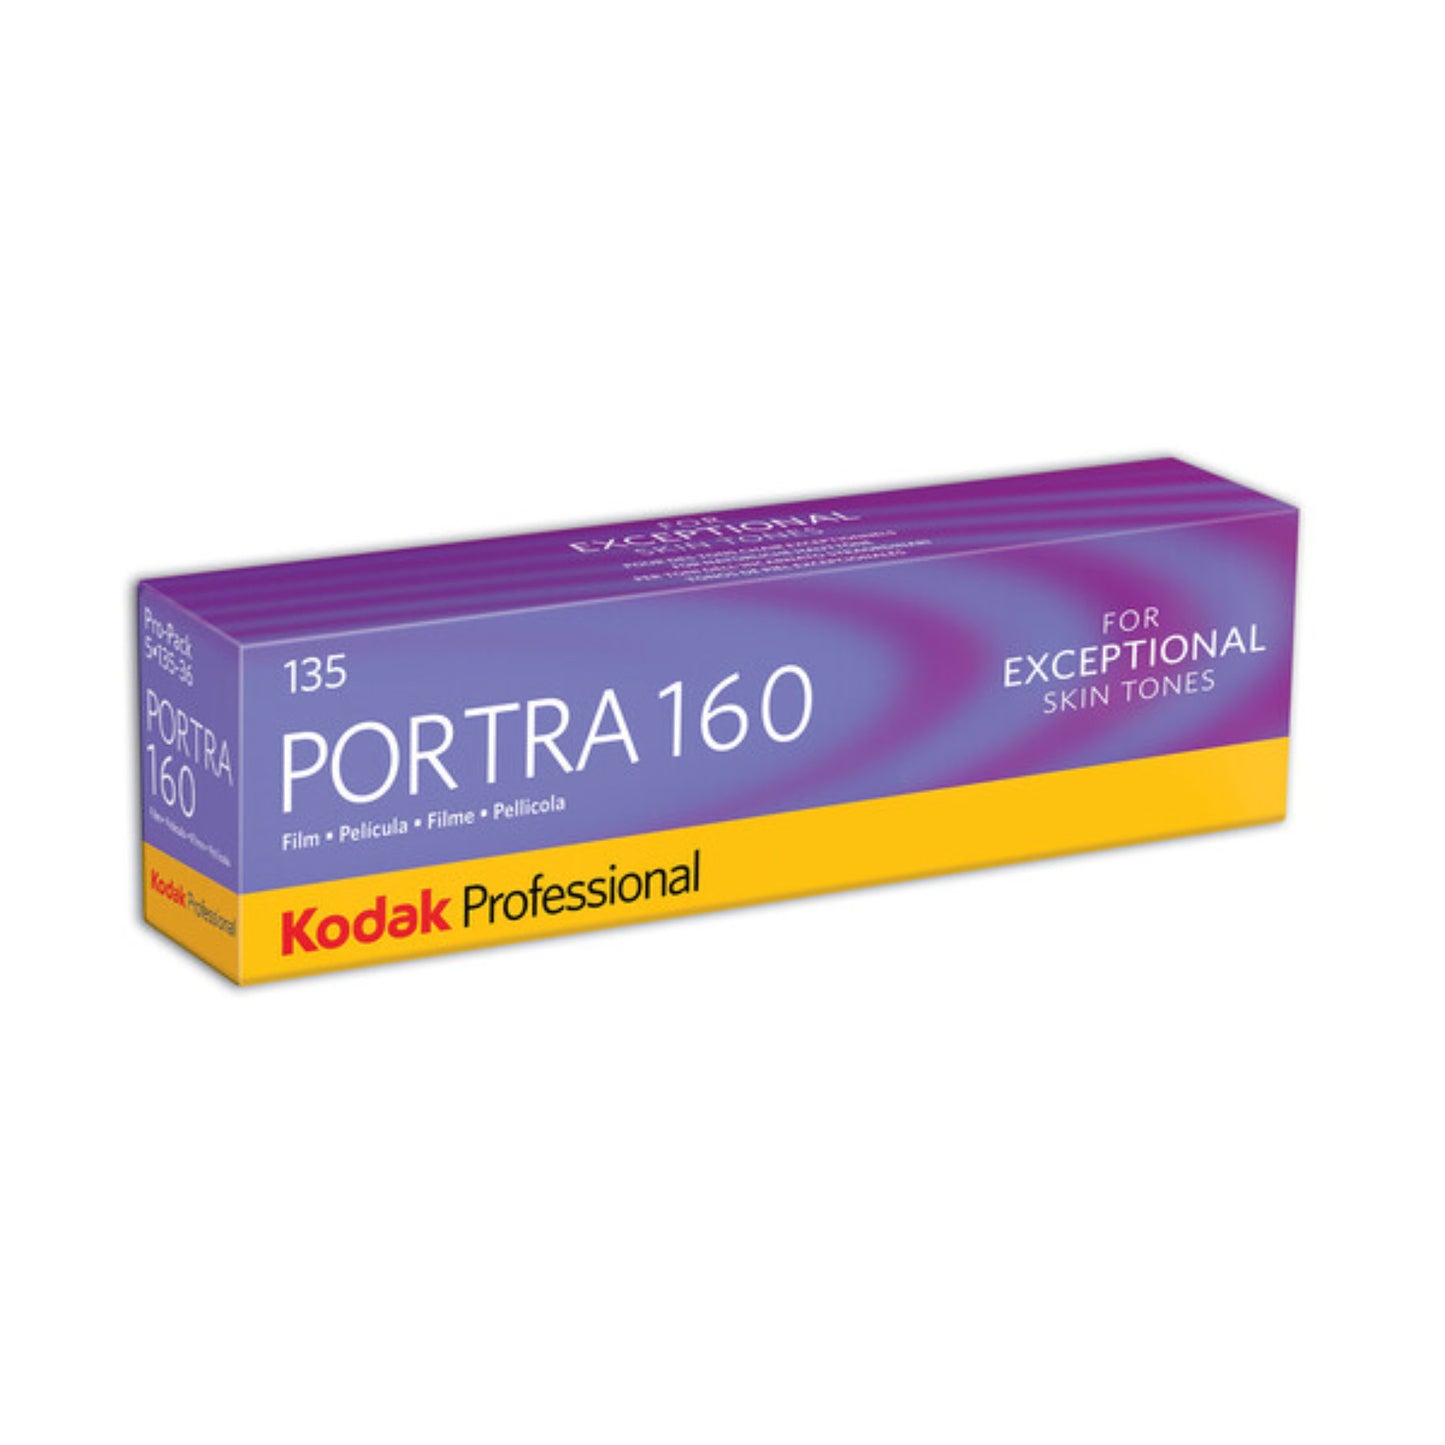 Buy Kodak Portra 160 iso 135-36 5 Pack at Topic Store